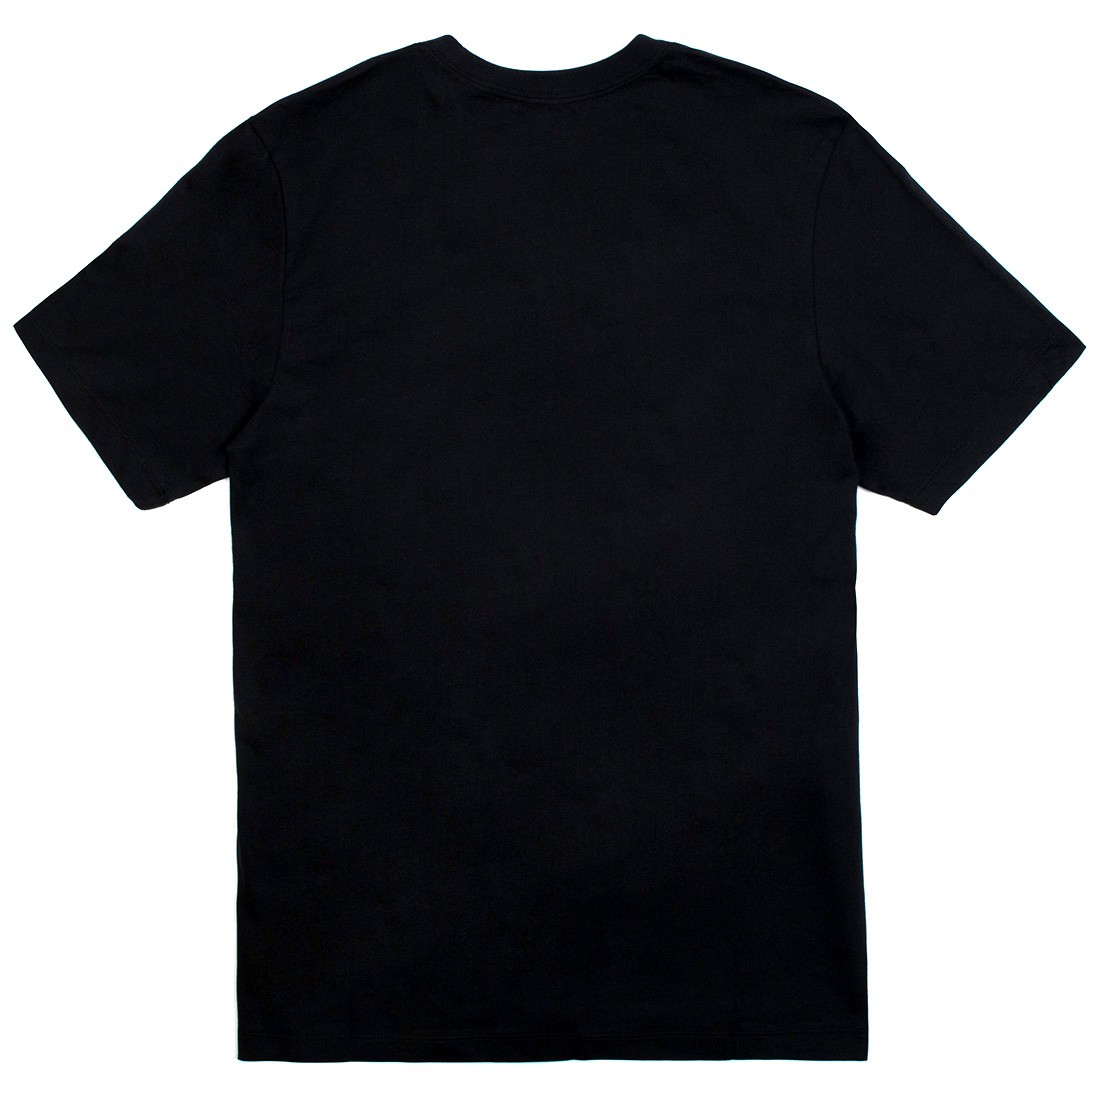 all black jordan shirt